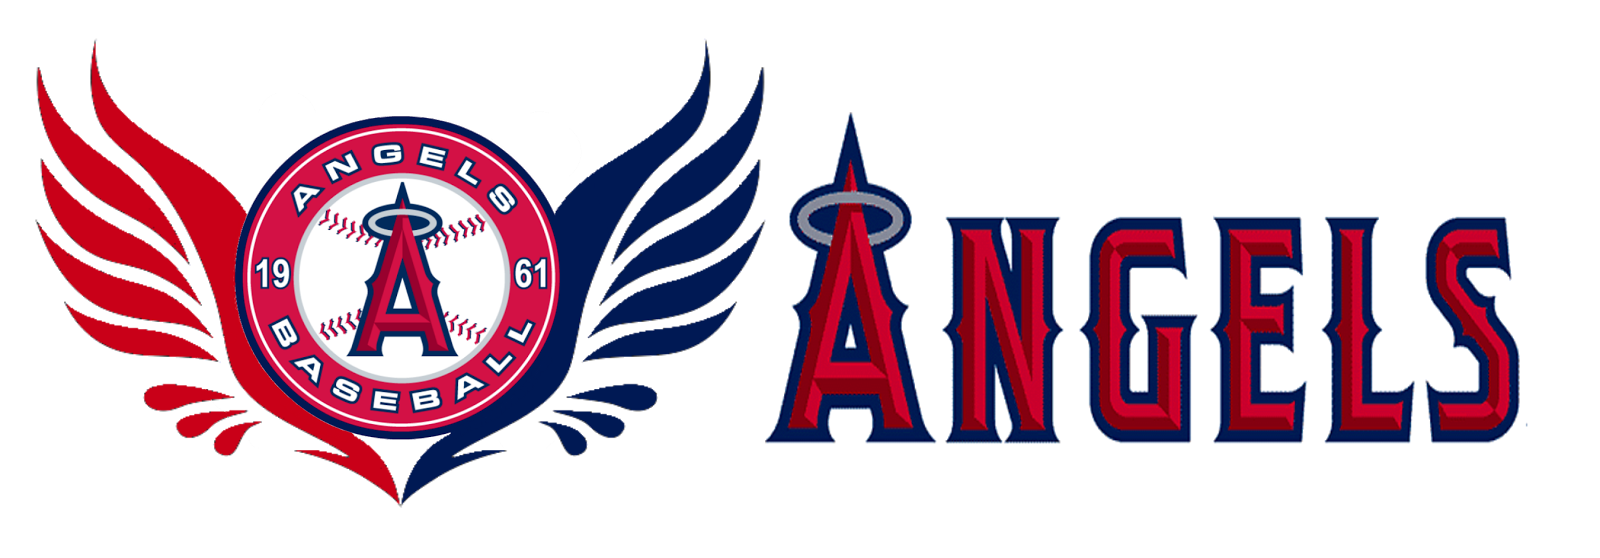 los angeles angels logo clip art - photo #33